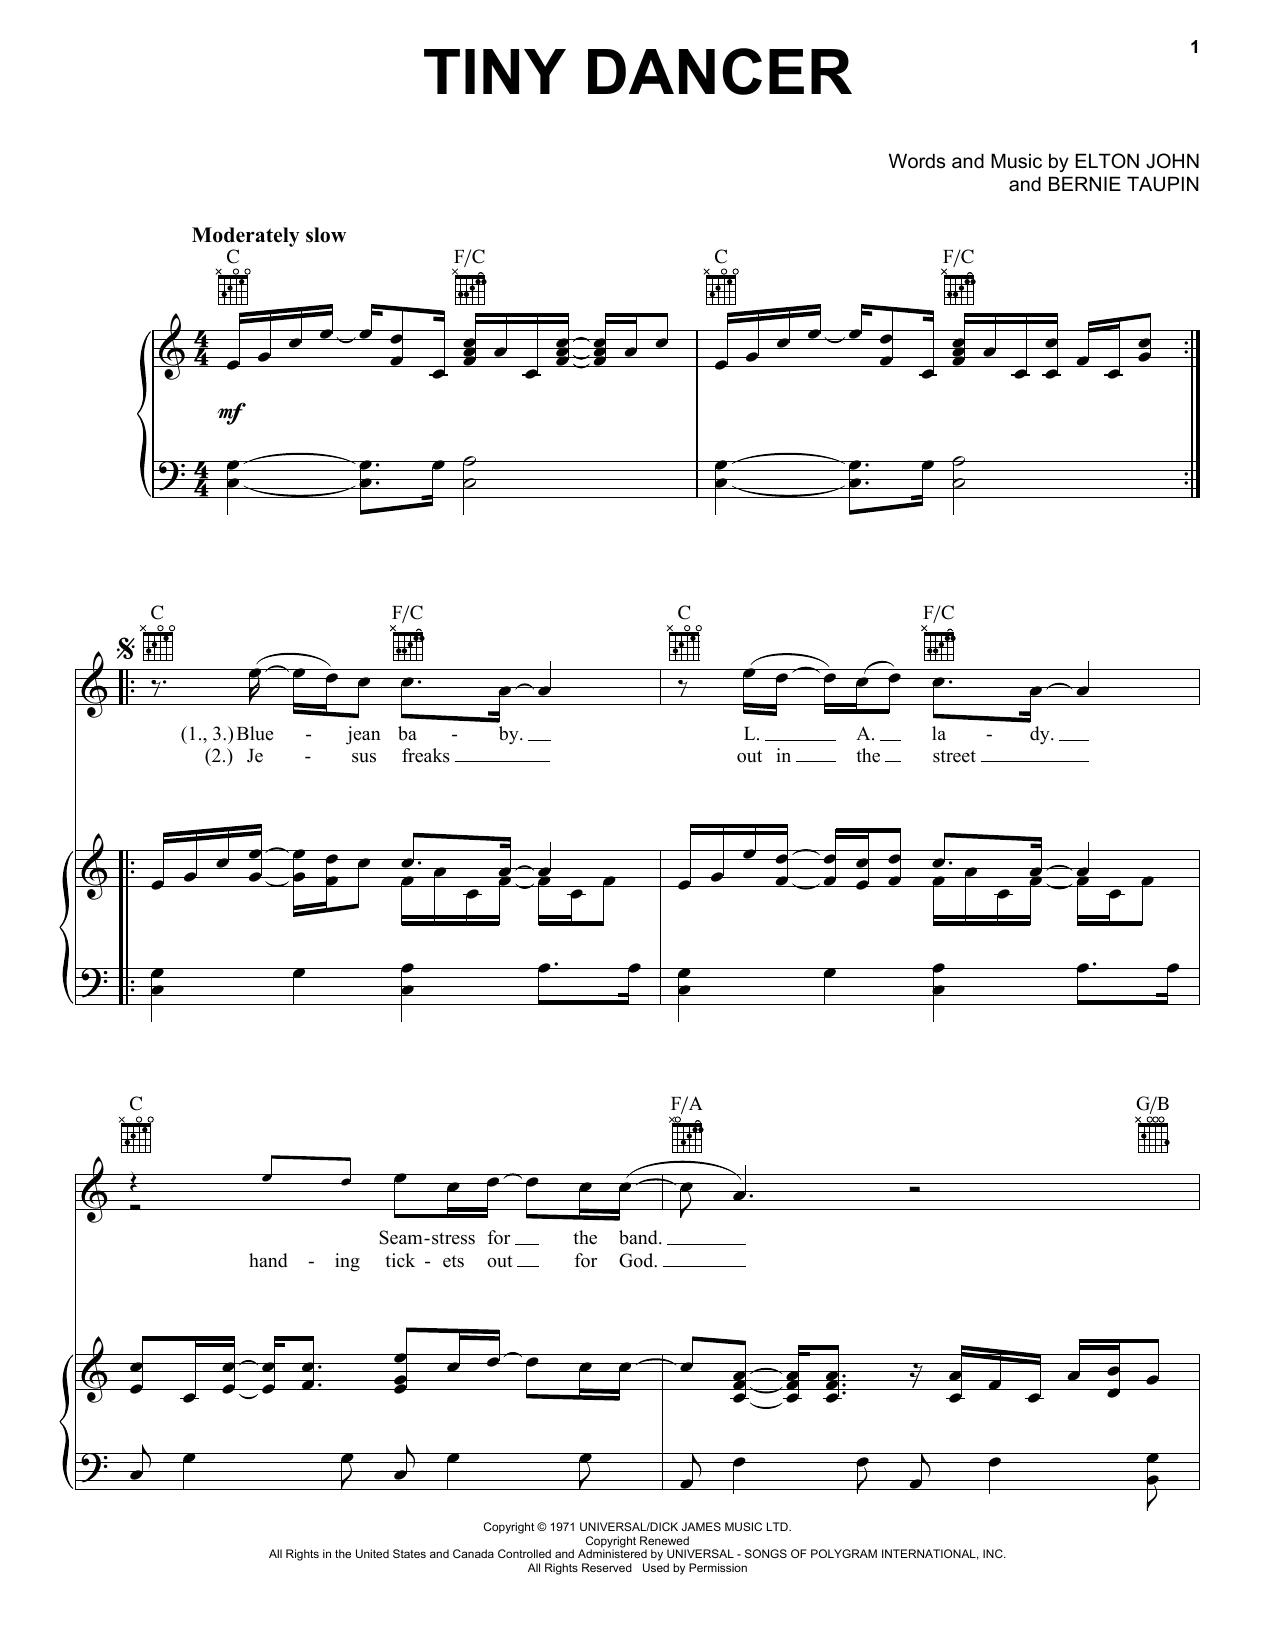 Elton John Tiny Dancer Sheet Music Notes & Chords for Piano - Download or Print PDF